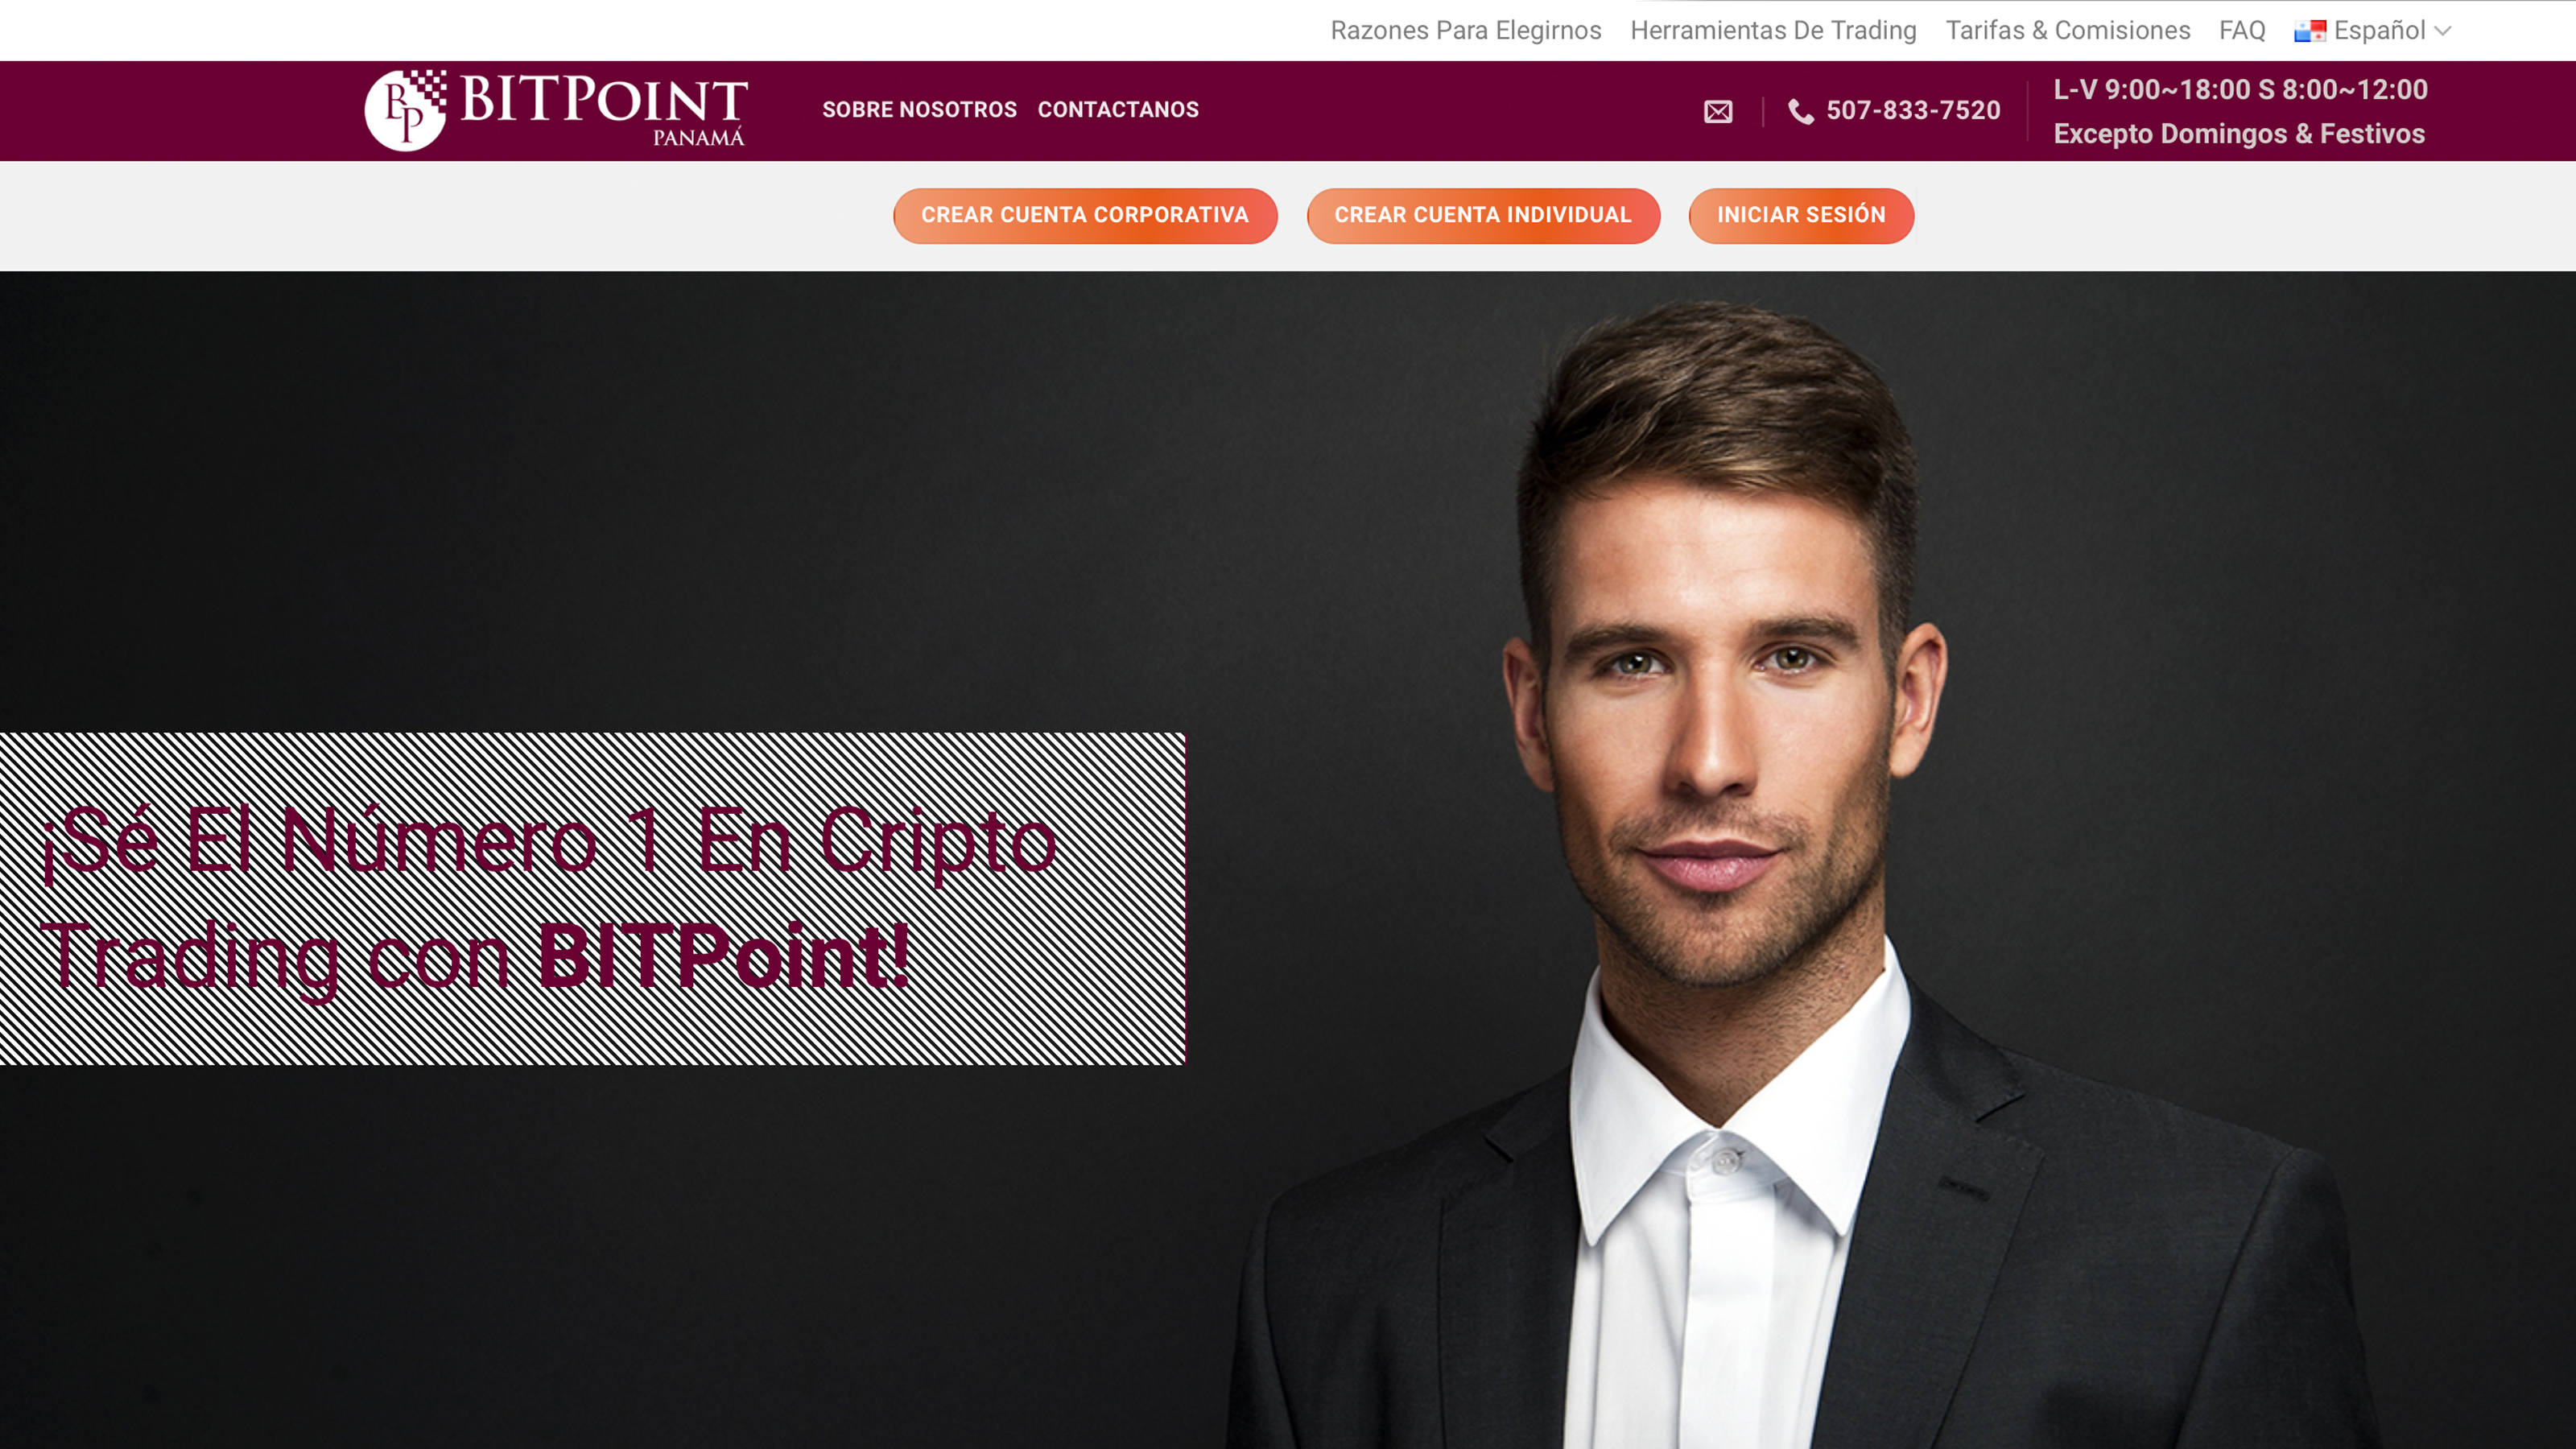 Japanese Exchange Bitpoint Launches Trading Platform in Panama